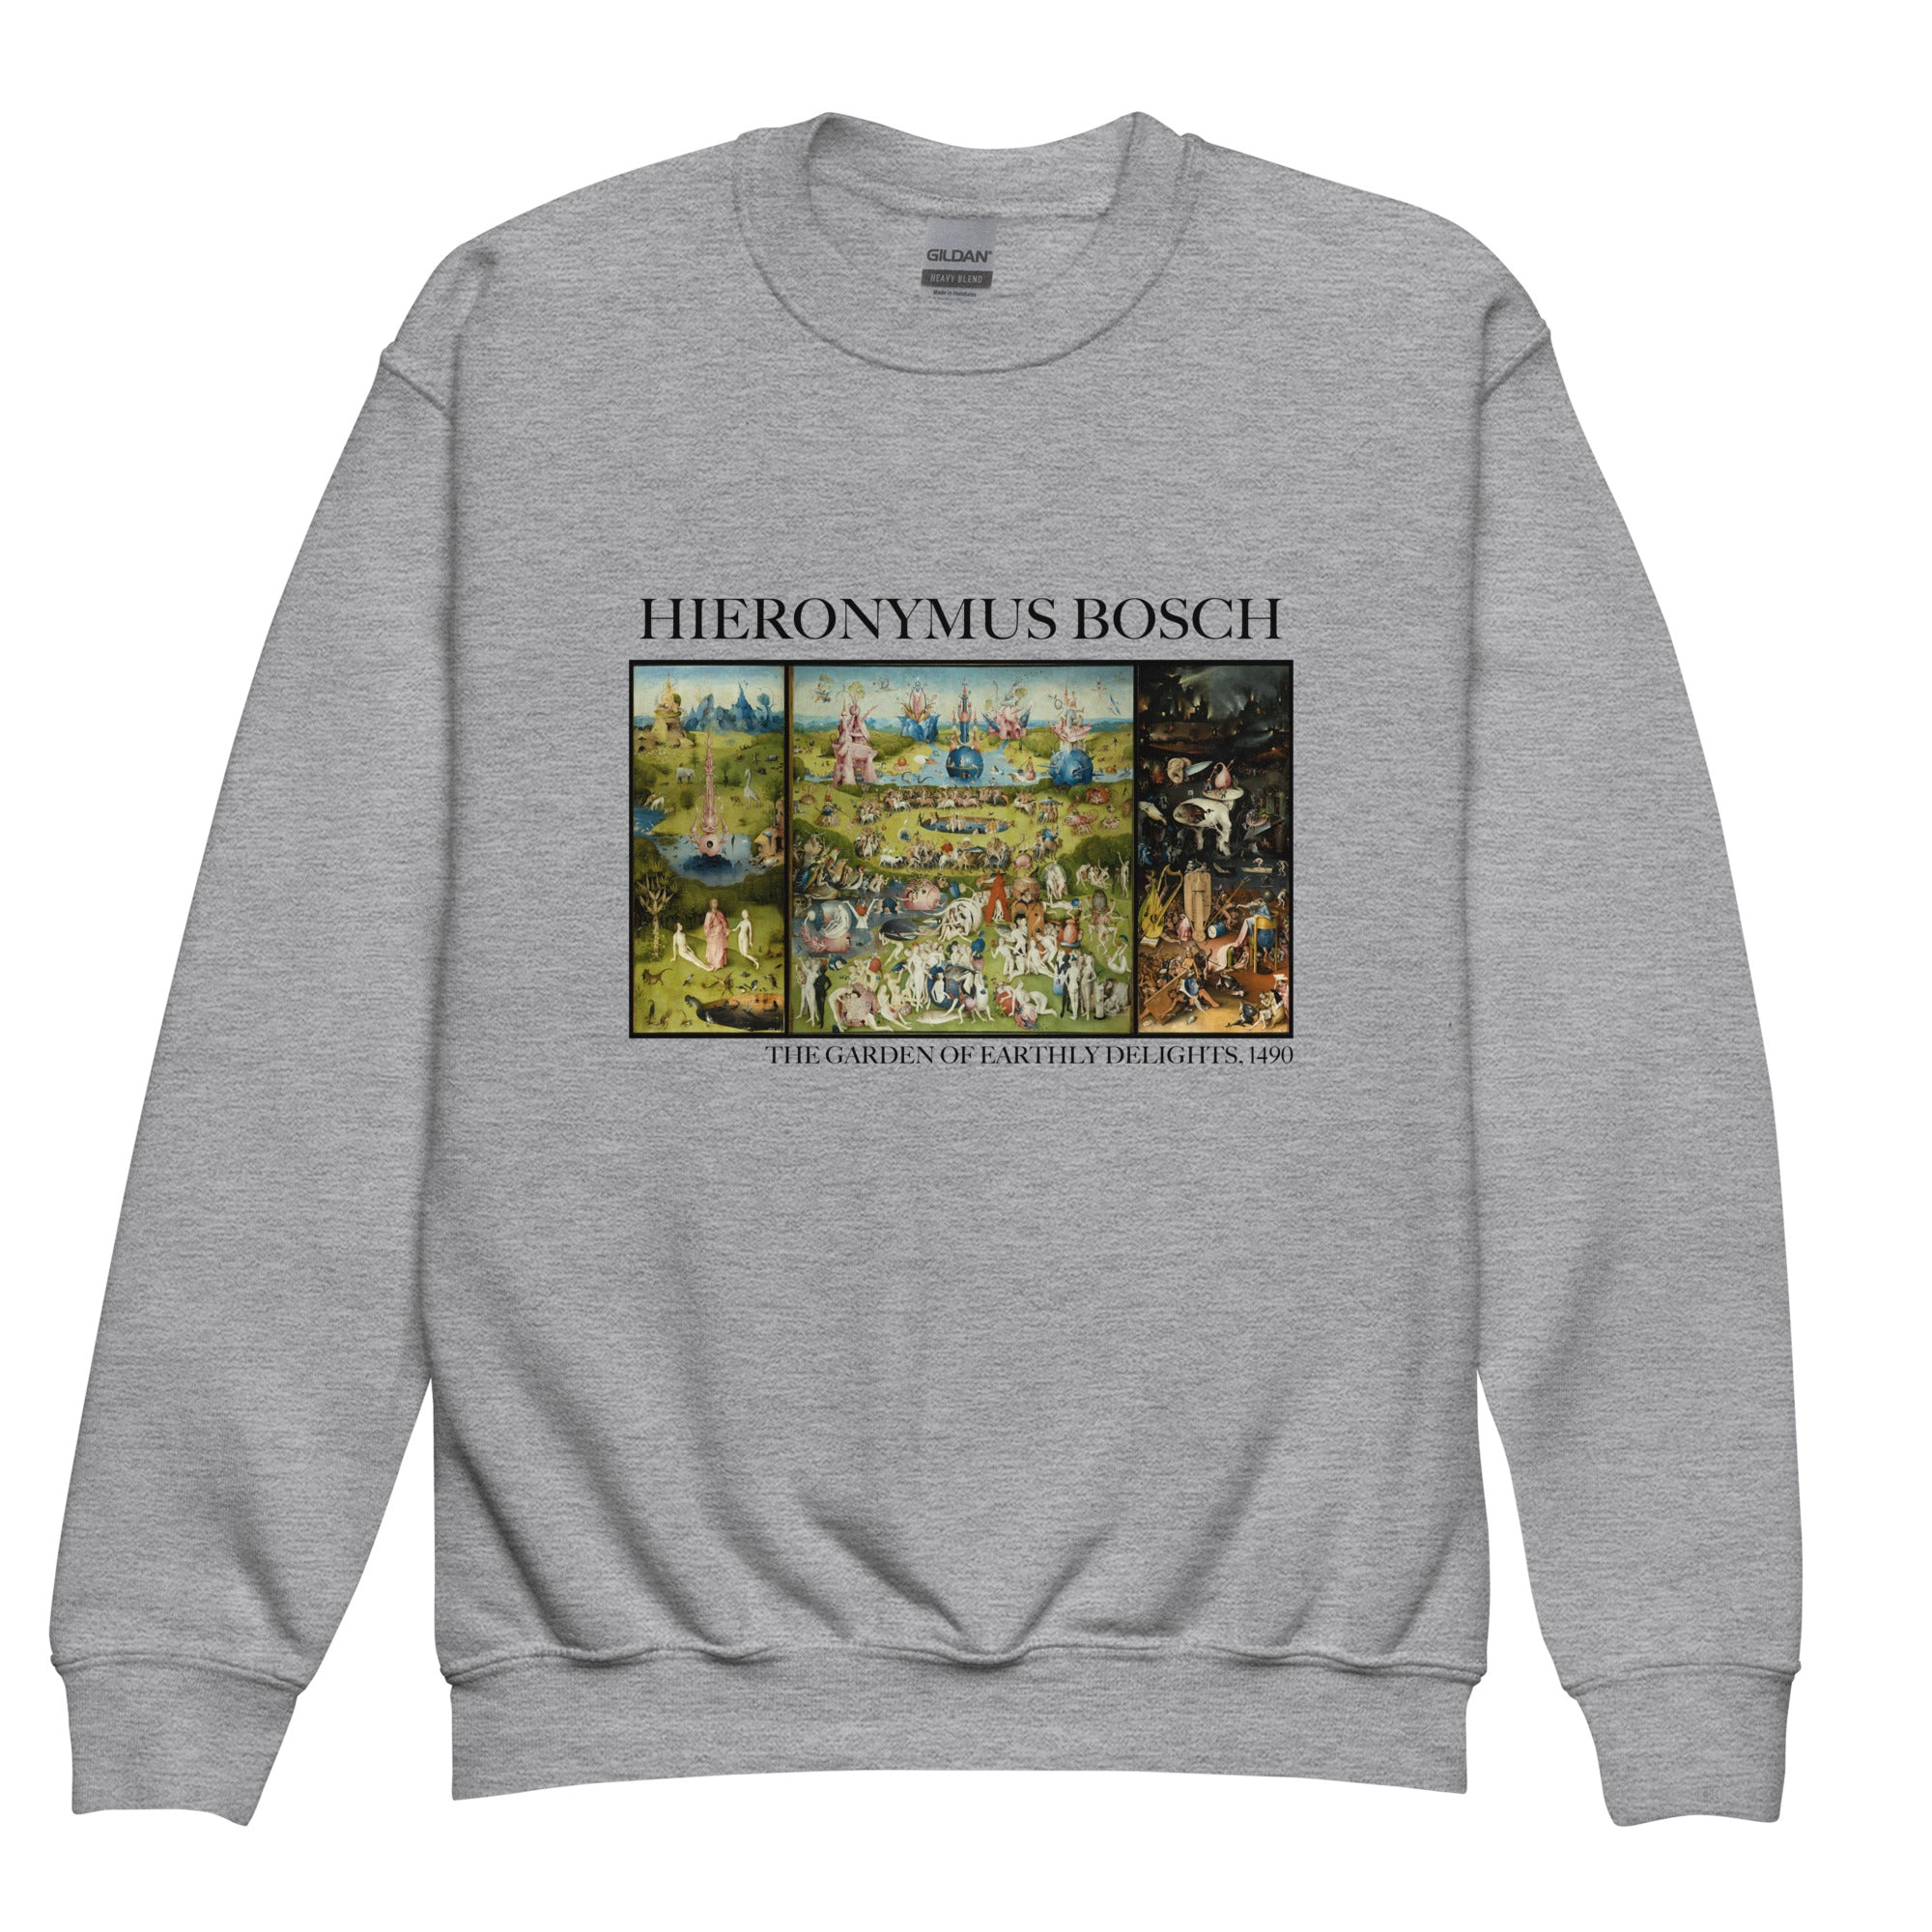 Hieronymus Bosch 'The Garden of Earthly Delights' Famous Painting Crewneck Sweatshirt | Premium Youth Art Sweatshirt